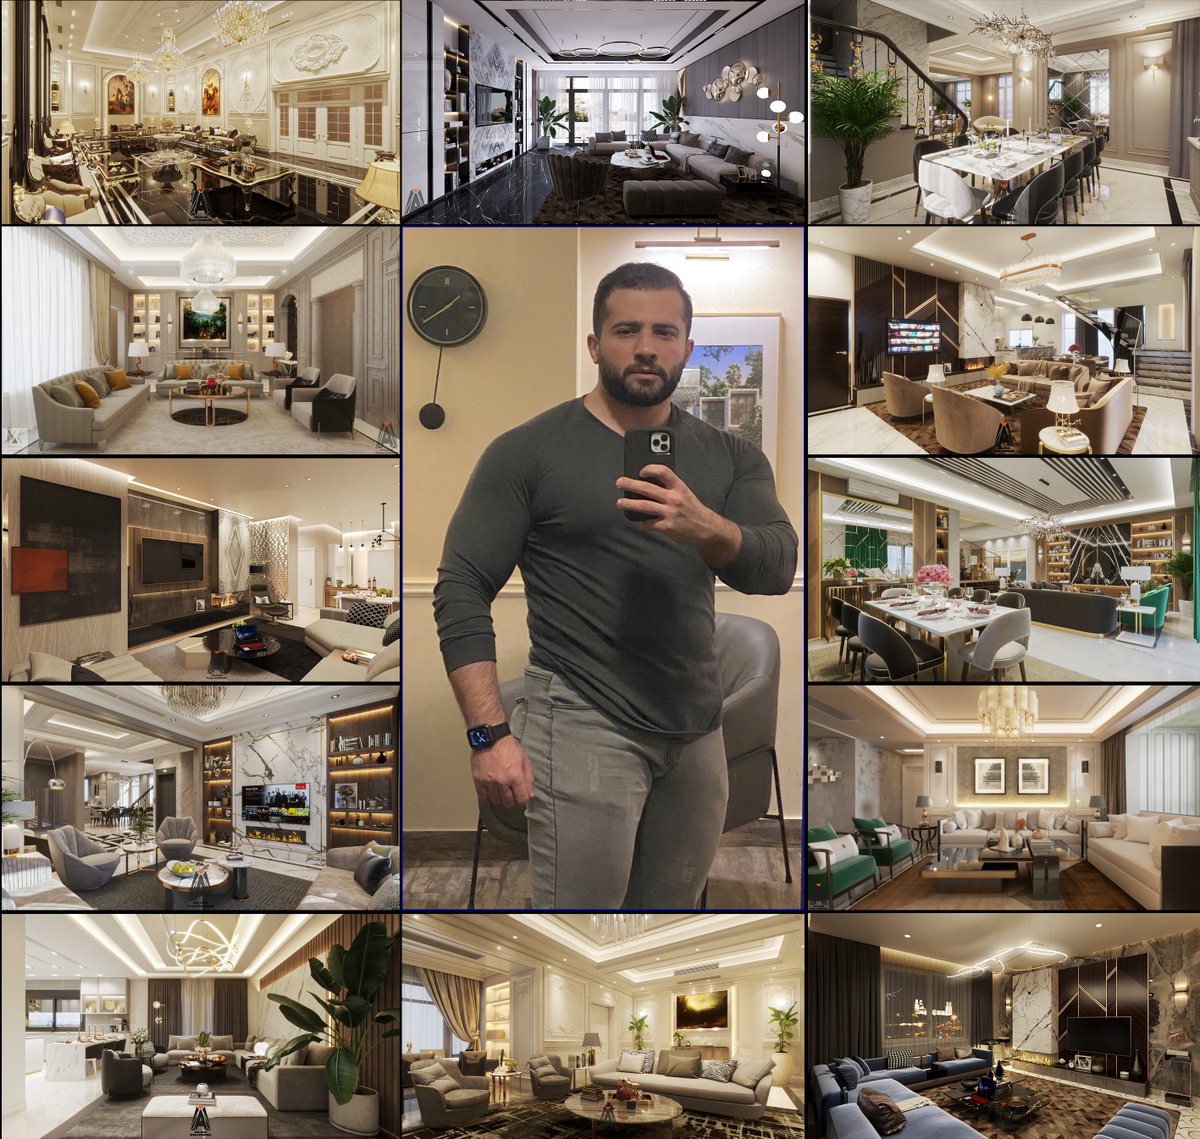 Me and My Interior Designs for 2021 

#InteriorDesign #designdubai #Design #Kuwait #Qatar
#UAE #KSA #SaudiArabia #Oman #Bahrain #GCC #Gulf
#InteriorDesignIdeas #Interior #Villa #Residential #VillaDecor
#MaximalistStyle #Modern #Decor #Interiors #Furniture
#InteriorDesigner